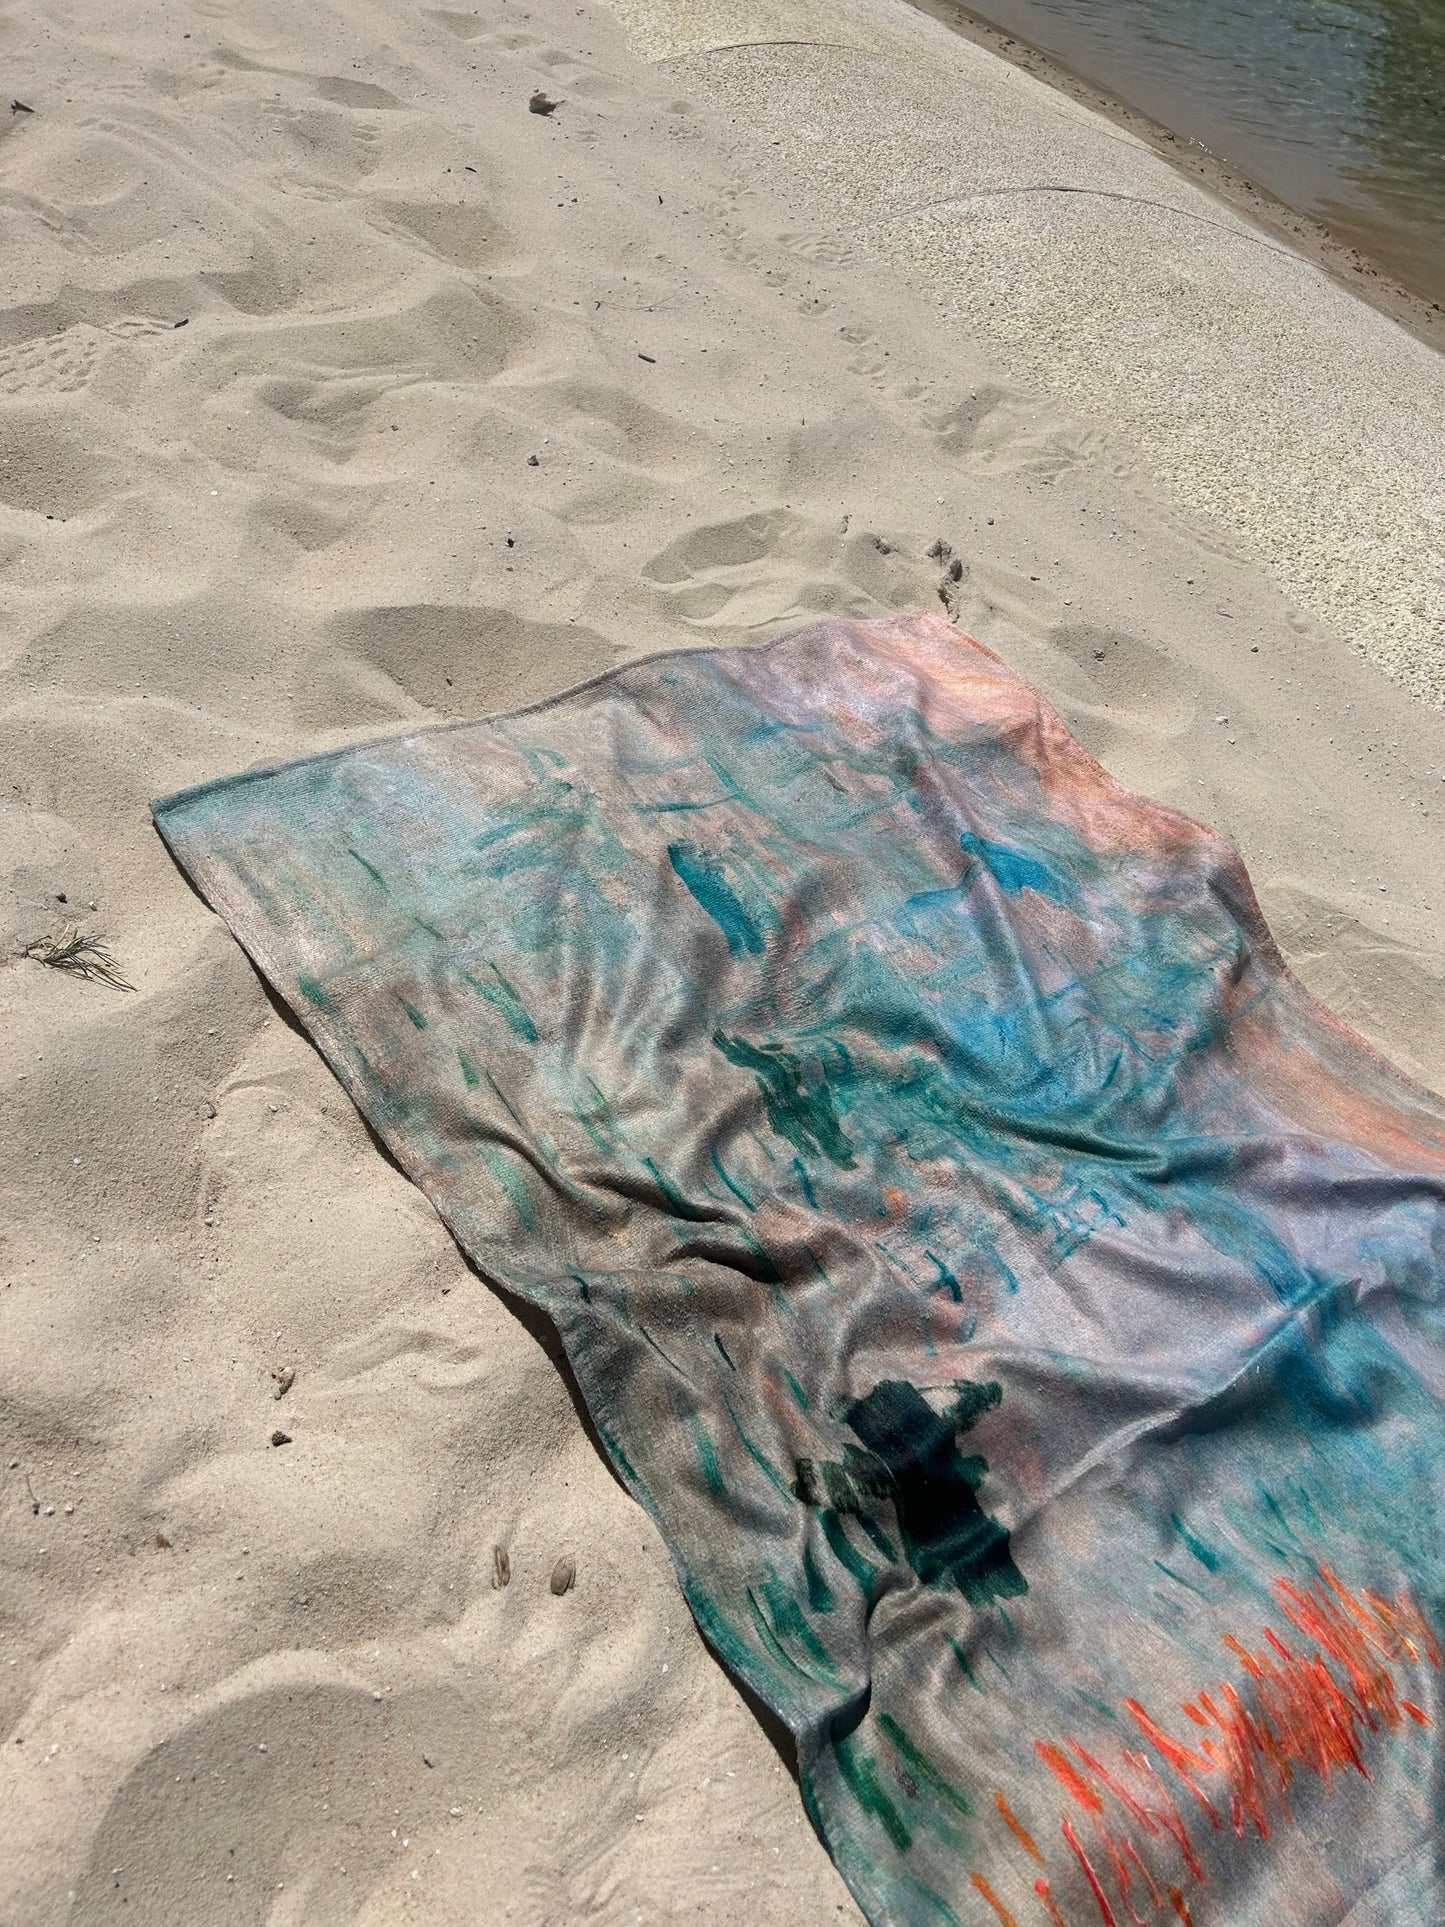 Sunrise Beach Towel